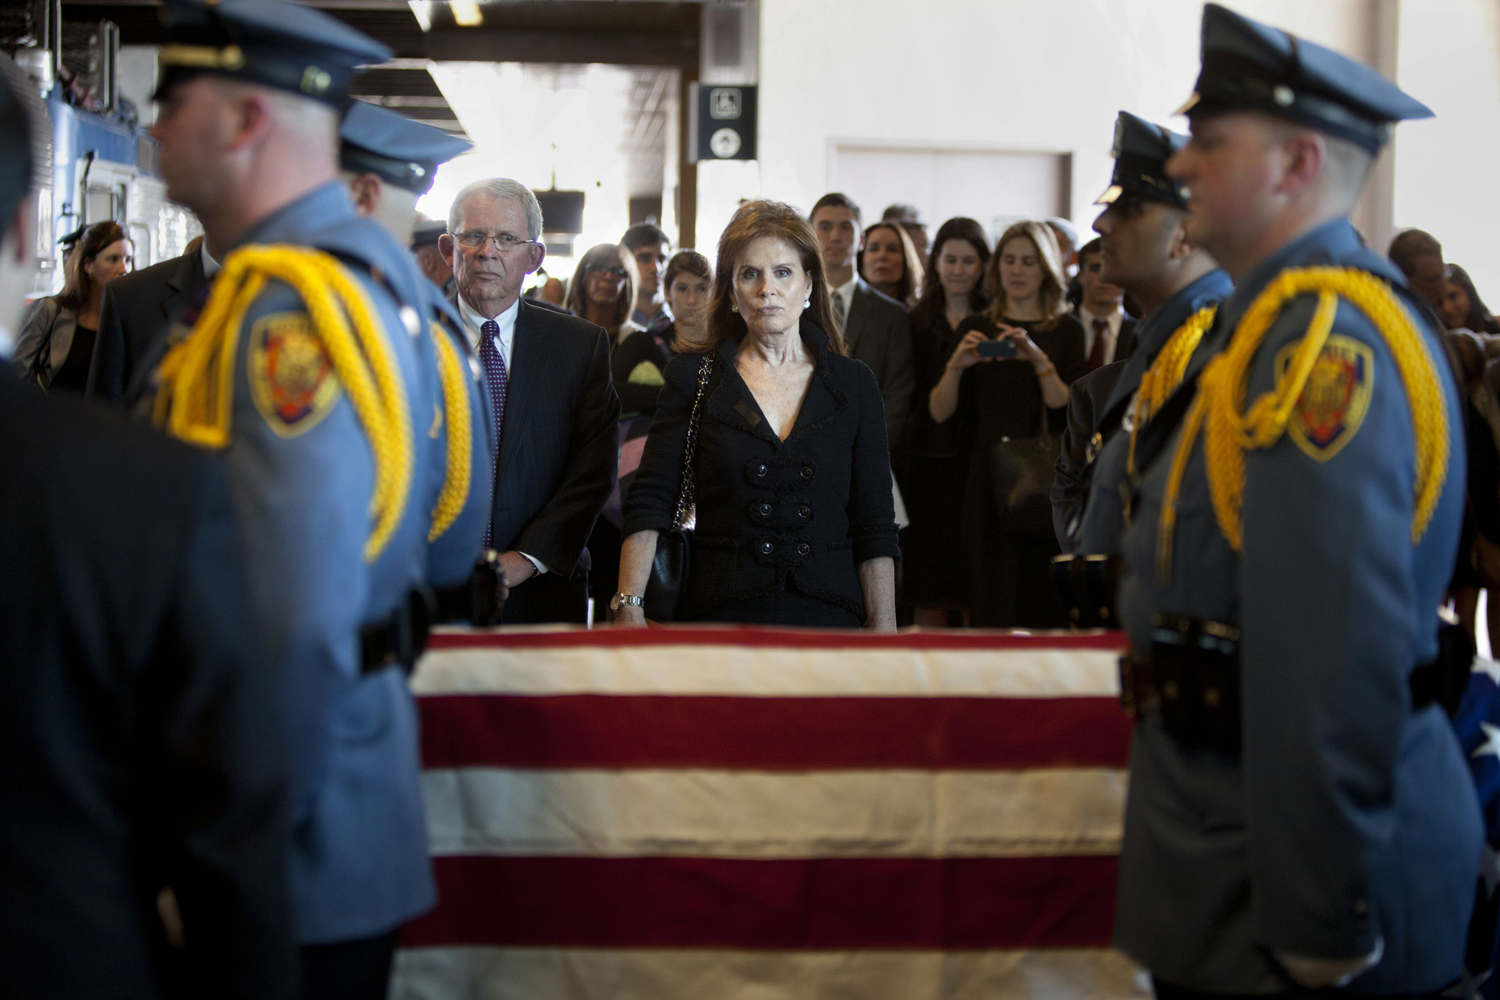 Senator Frank Lautenberg's widow looks on as his casket is wheeled onto a train, in Secaucus, New Jersey